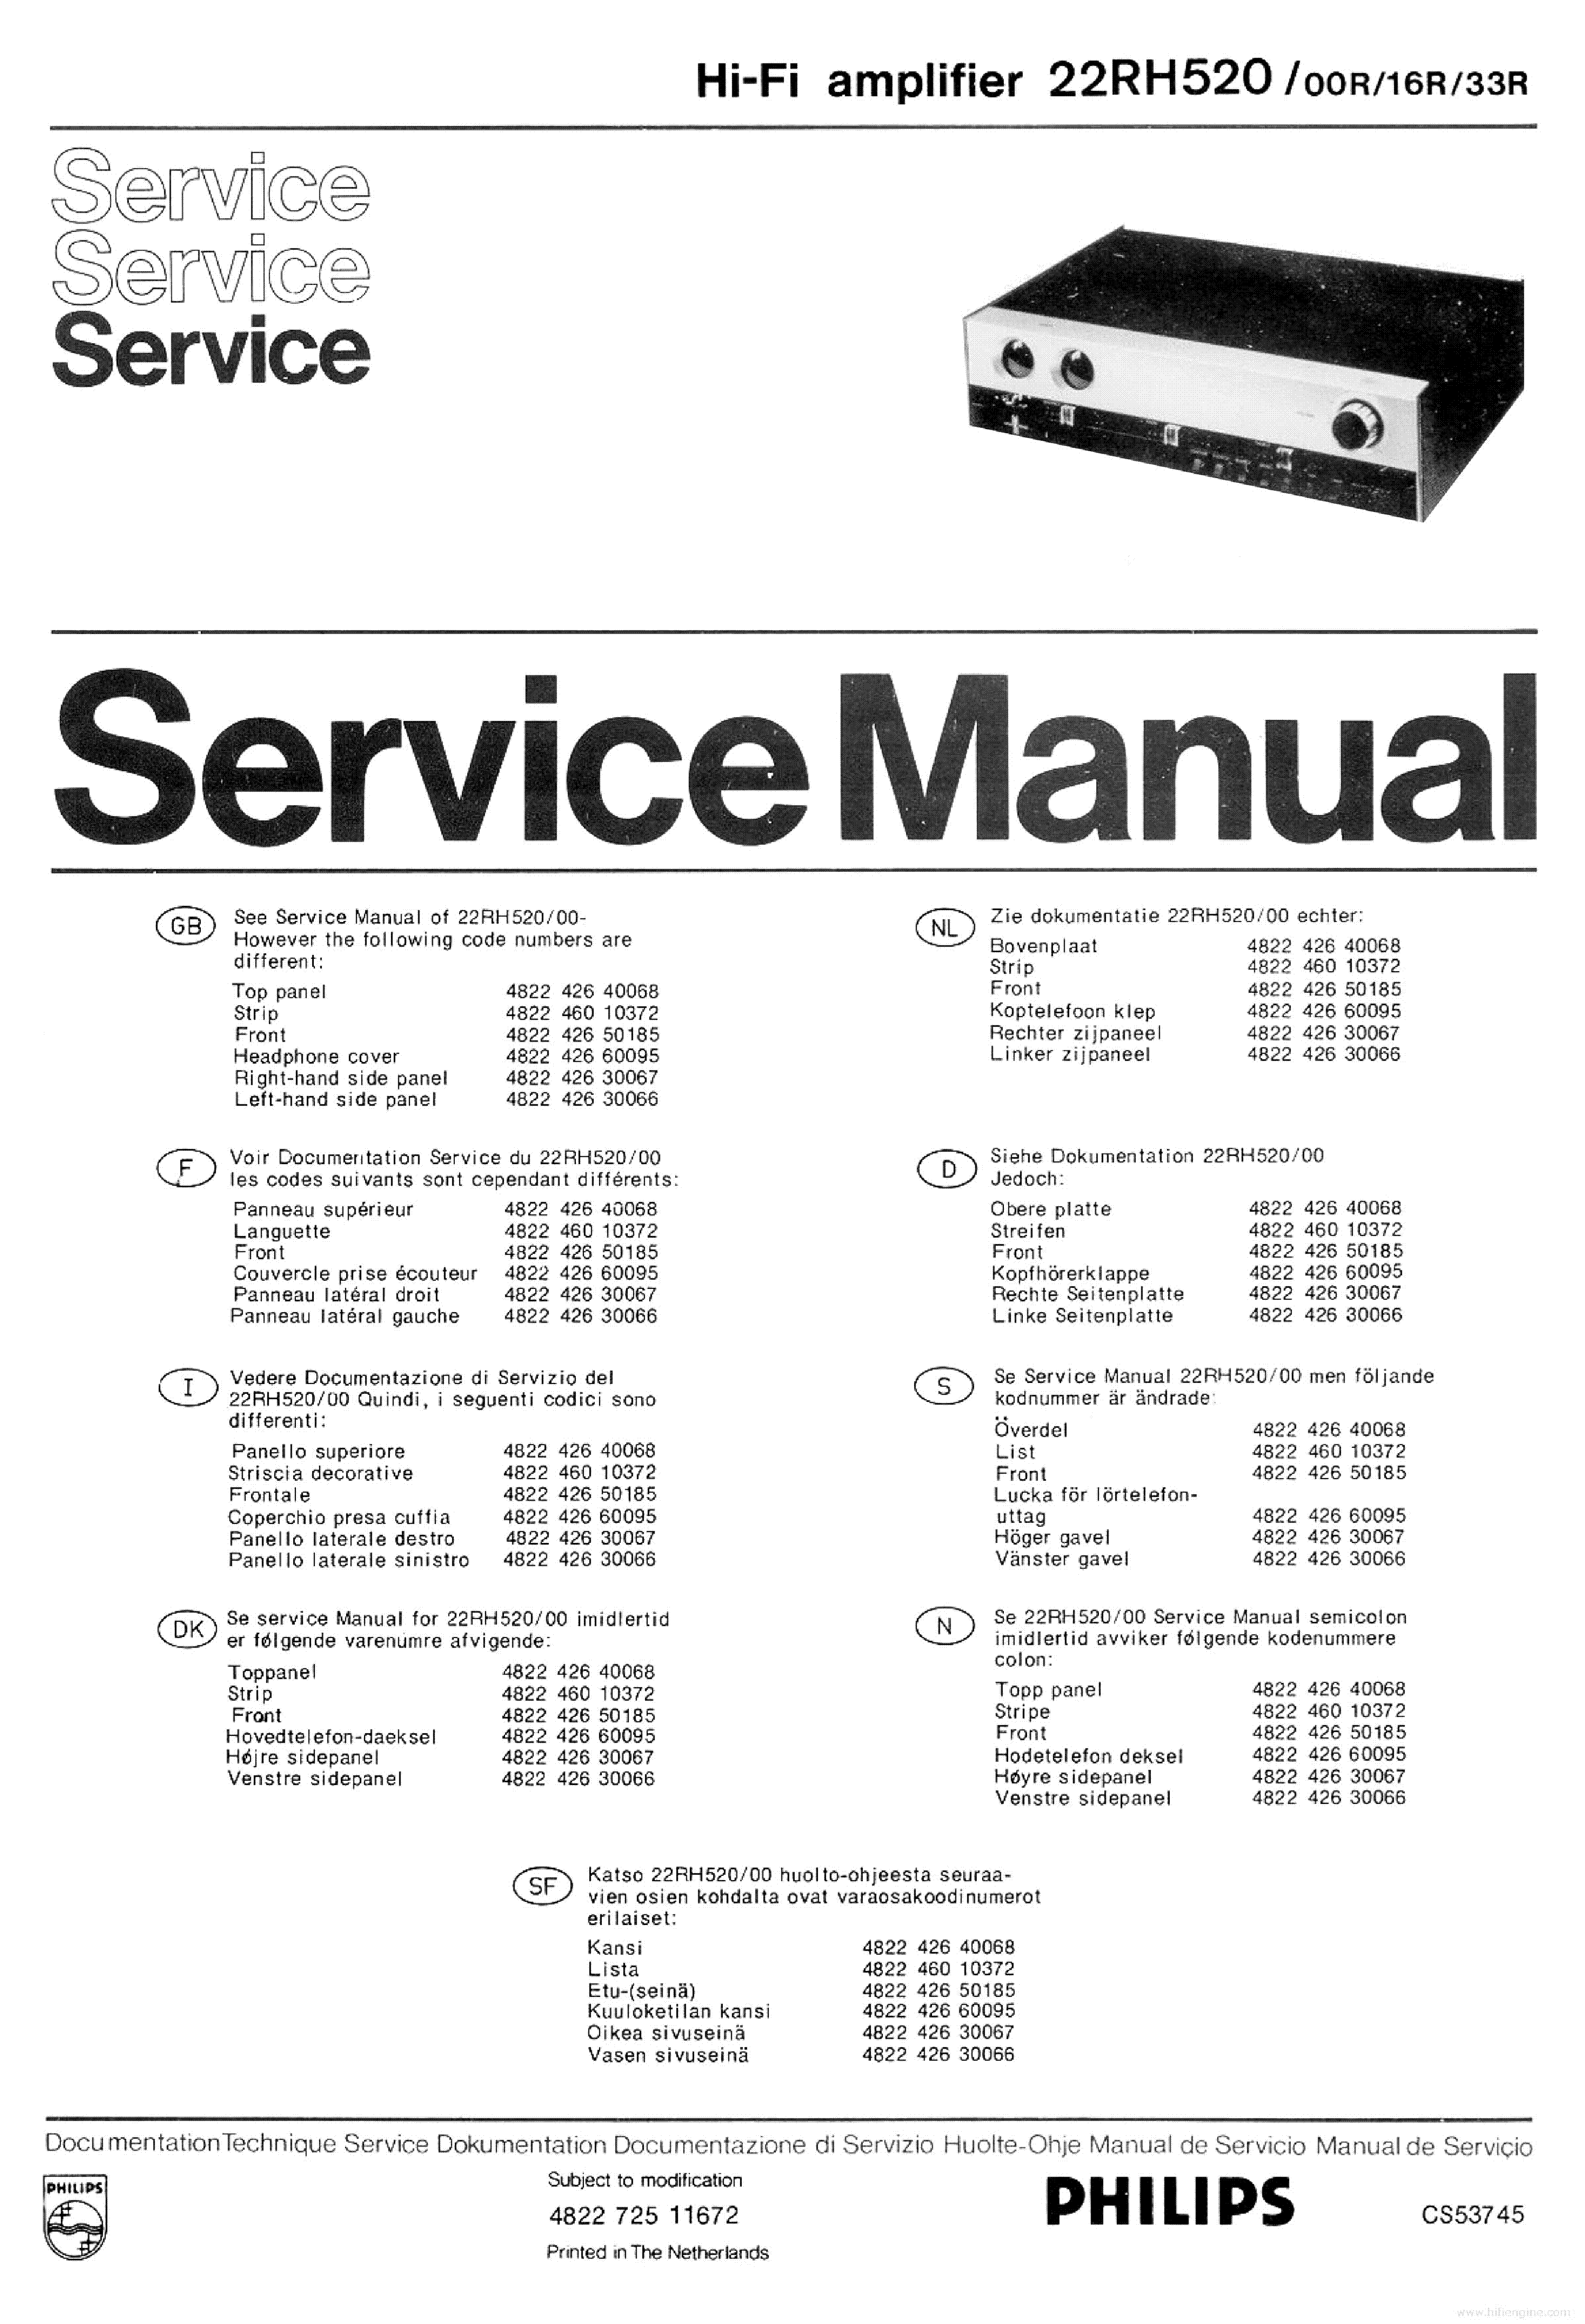 PHILIPS 22RH520-00R 16R 33R SM service manual (1st page)